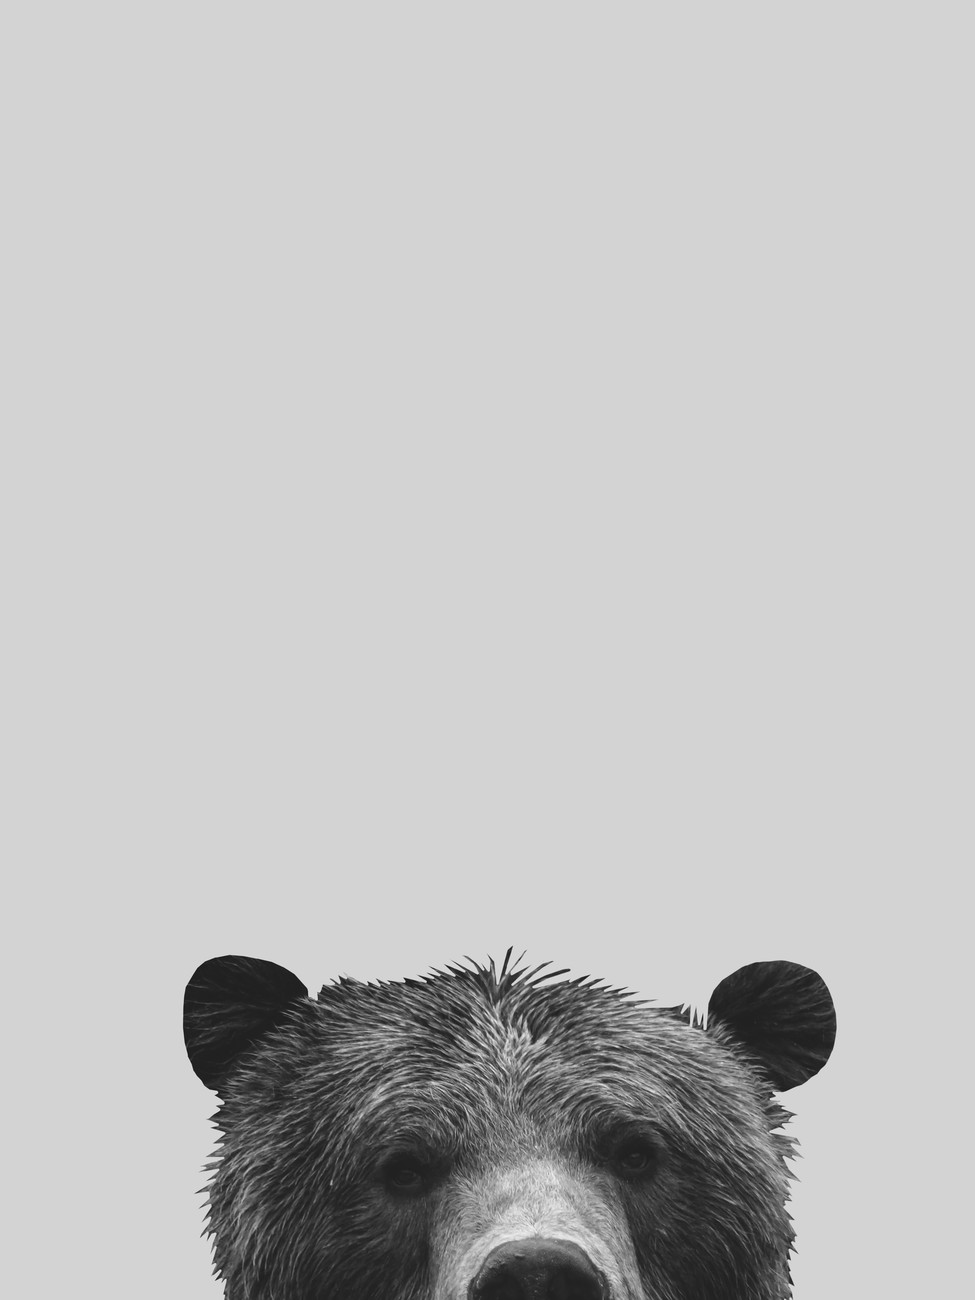 Illustration Grey bear